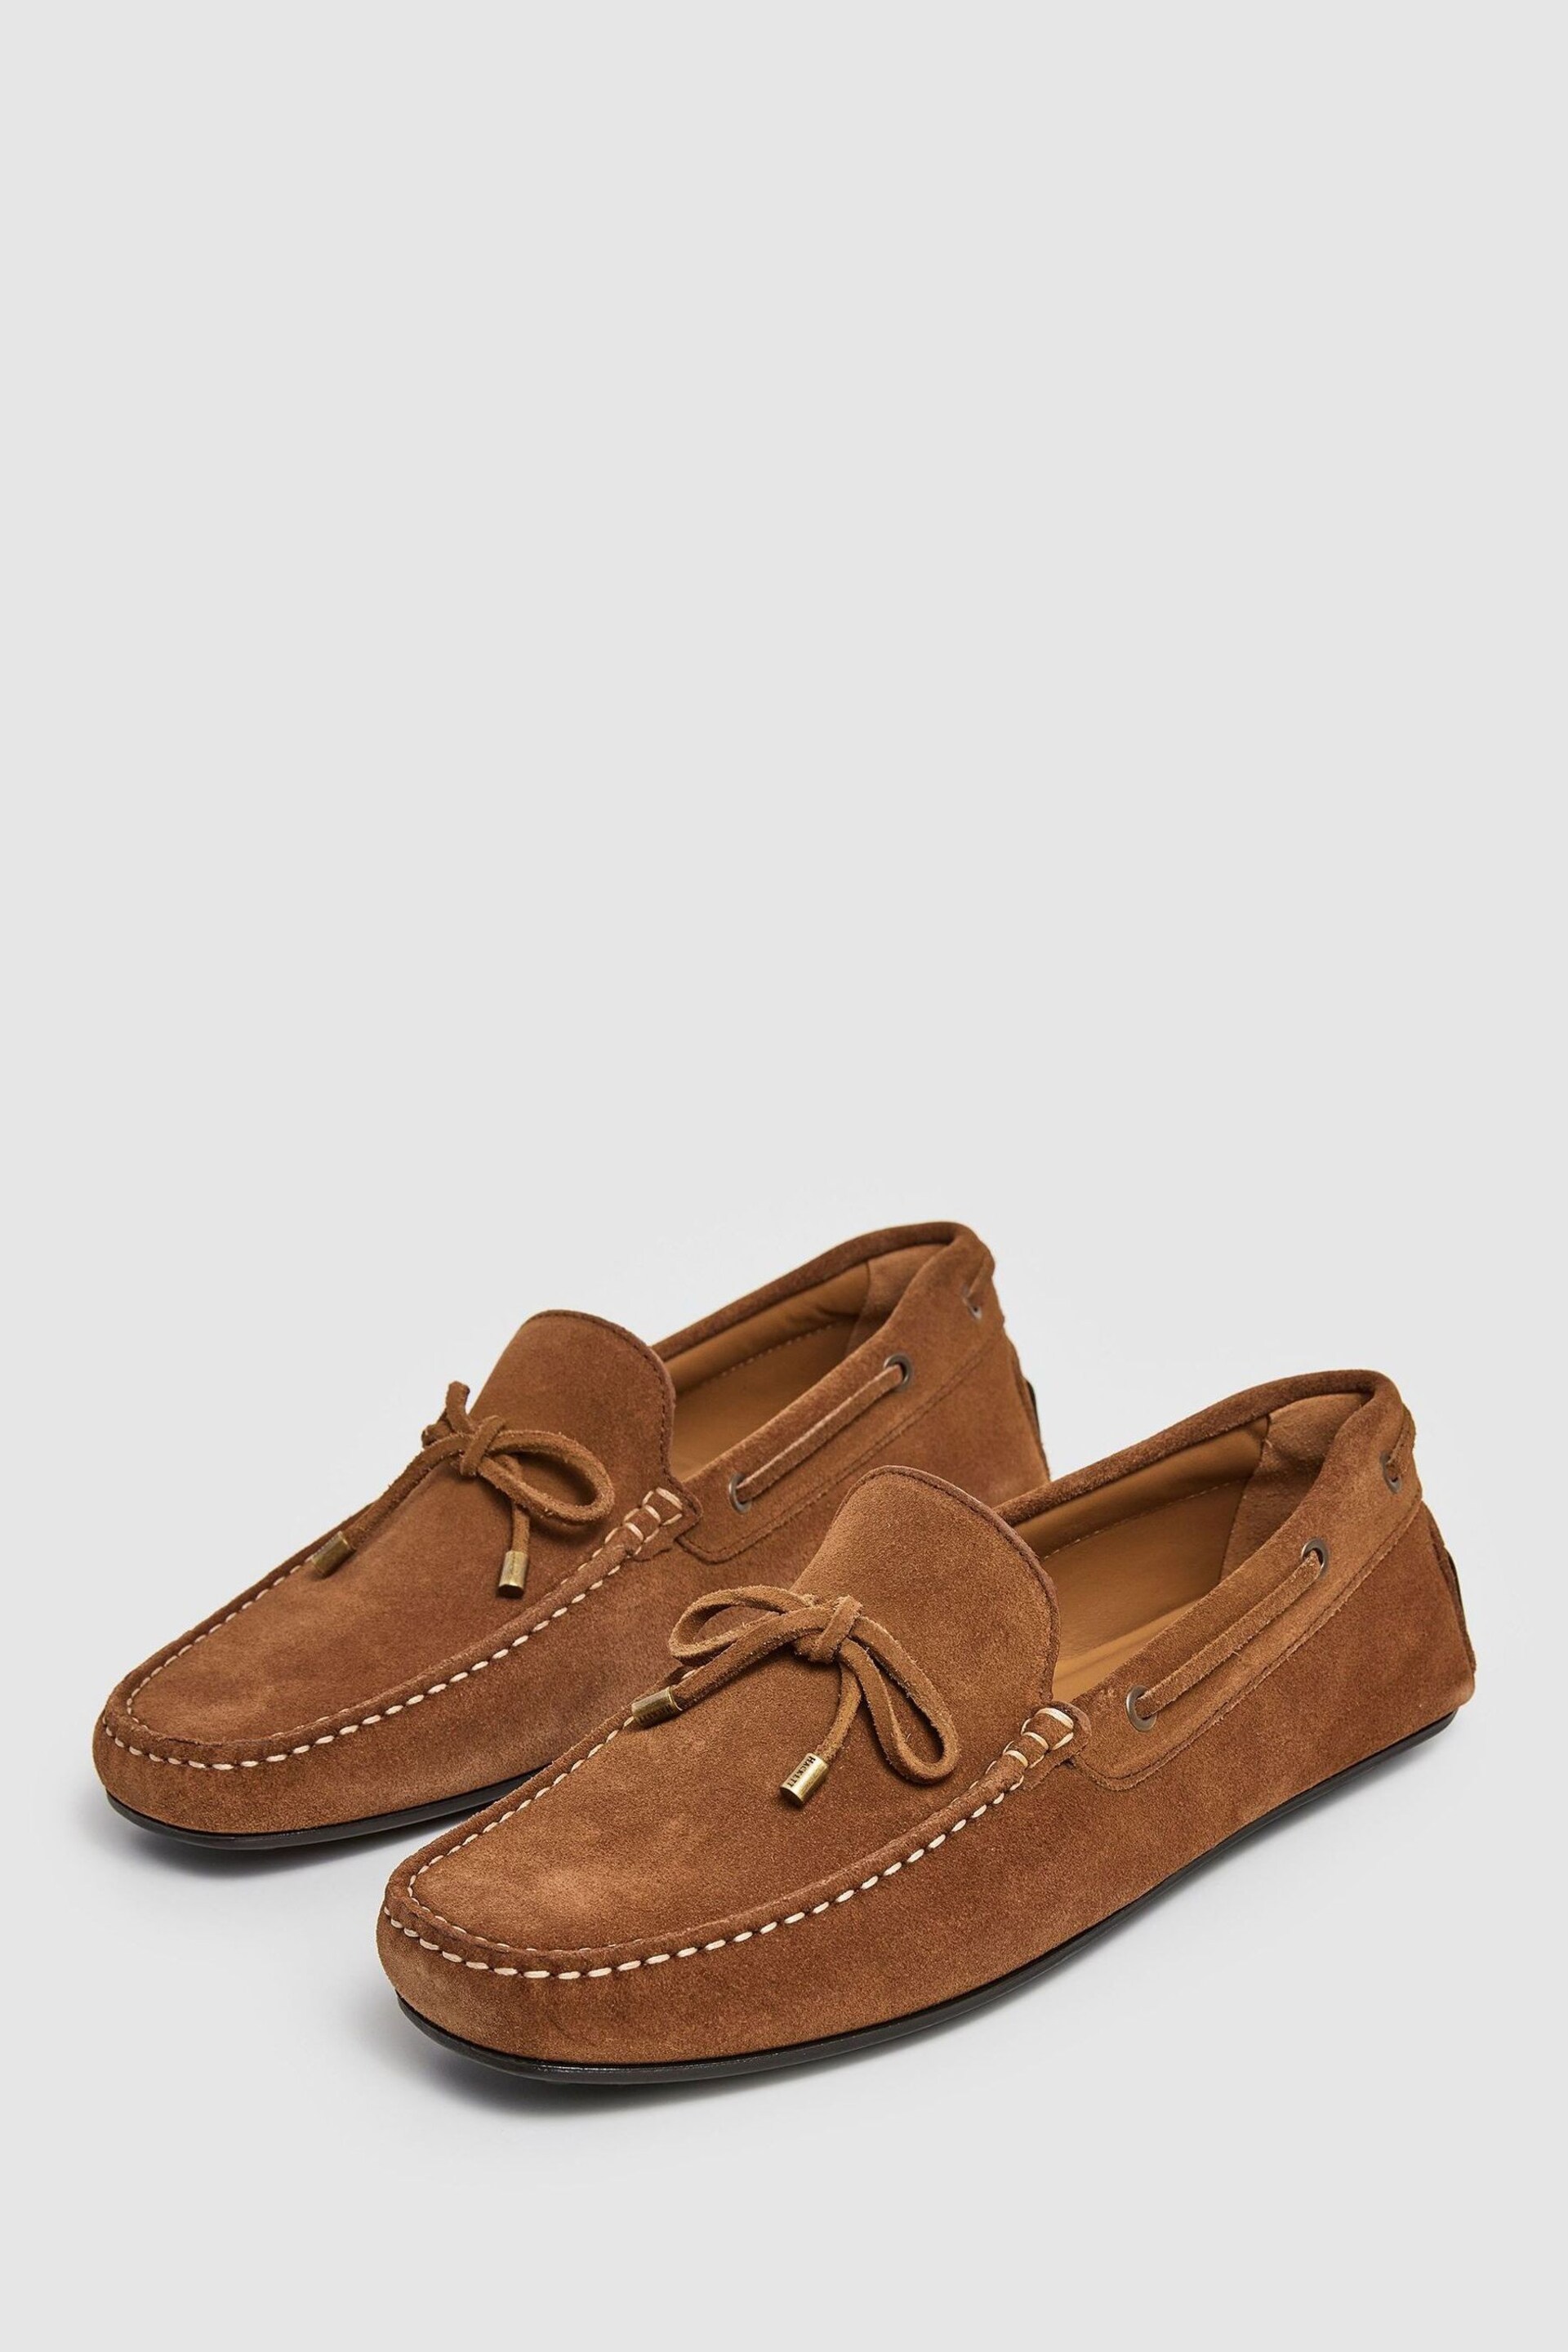 Hackett London Men Regular Brown Shoes - Image 2 of 6